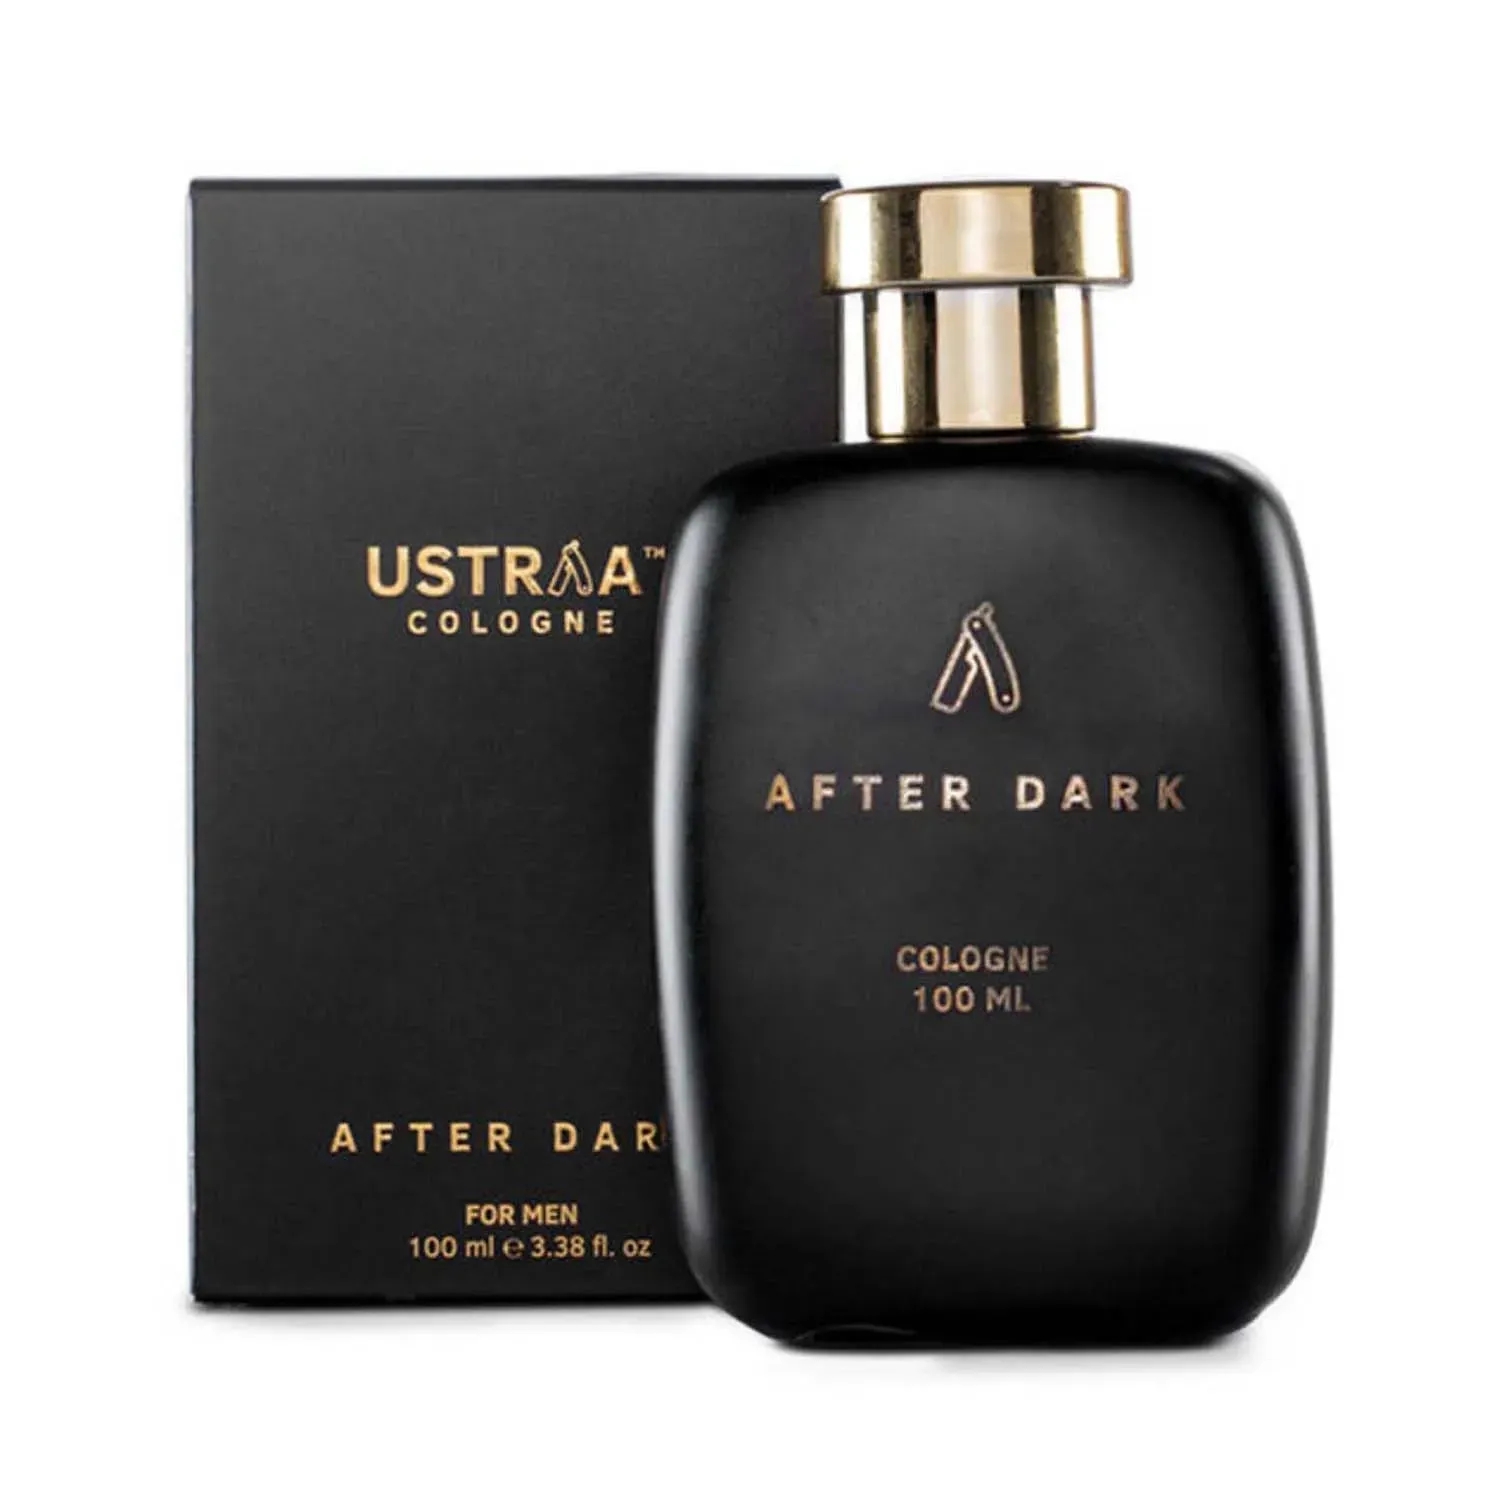 Ustraa After Dark Cologne Perfume - (100ml)